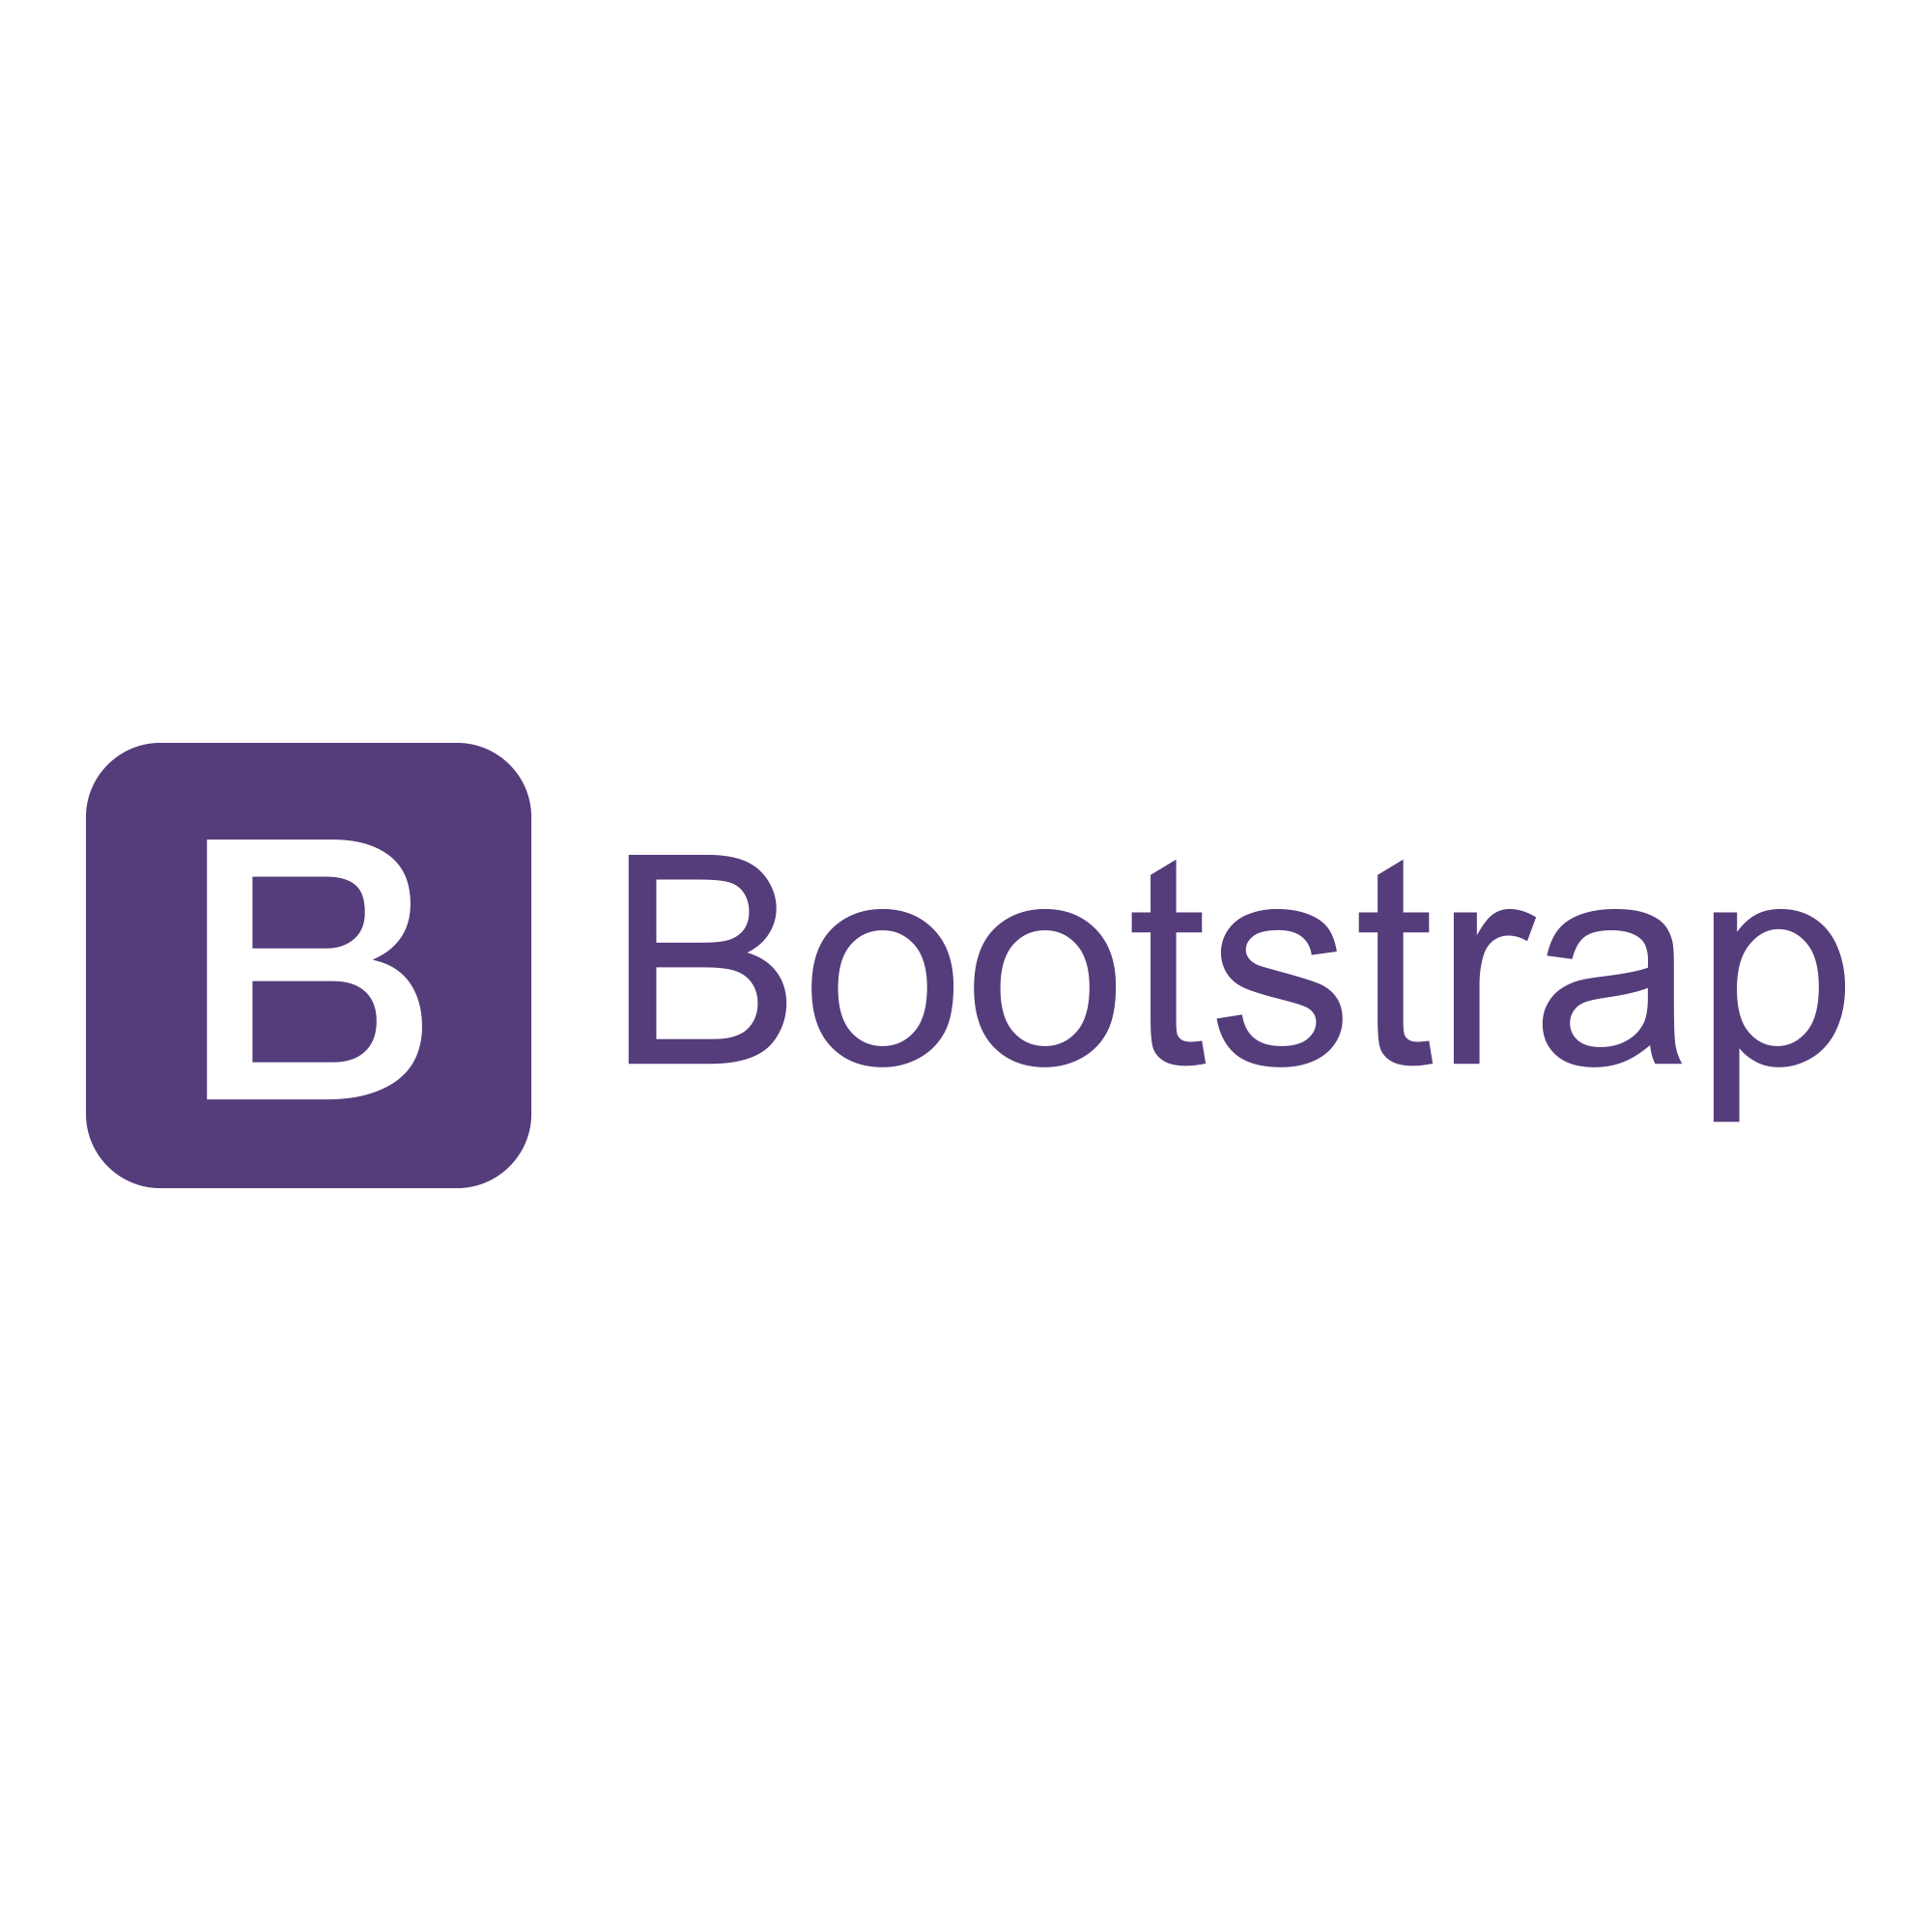 Bootstrap изображение. Bootstrap. Картинка Bootstrap. Бутстрап логотип. Логотип Bootstrap PNG.